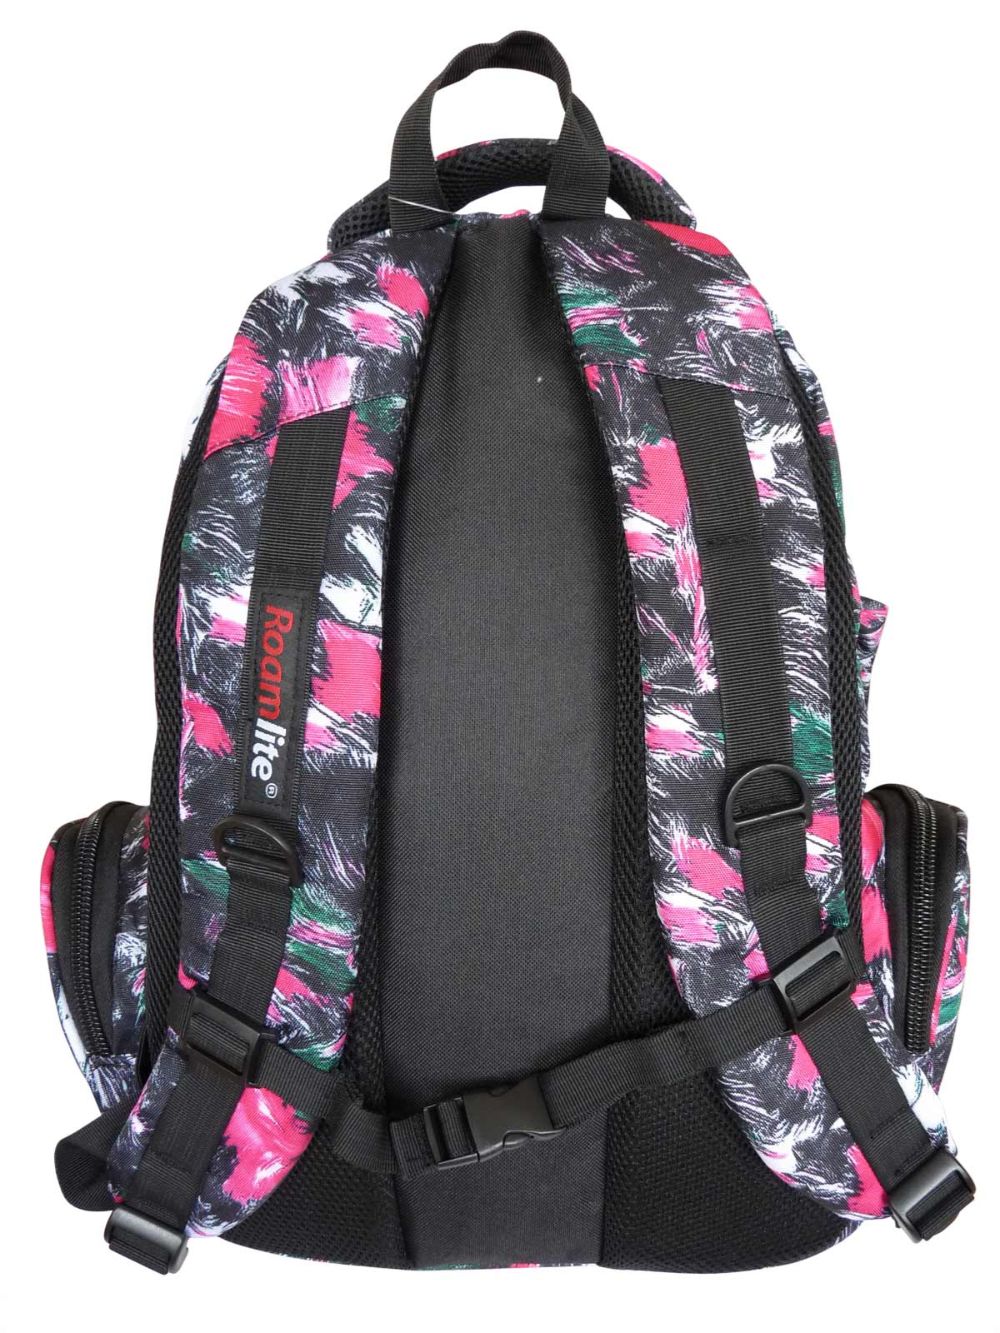 Roamlite Childrens Backpack Pink Paint pattern RL839 back